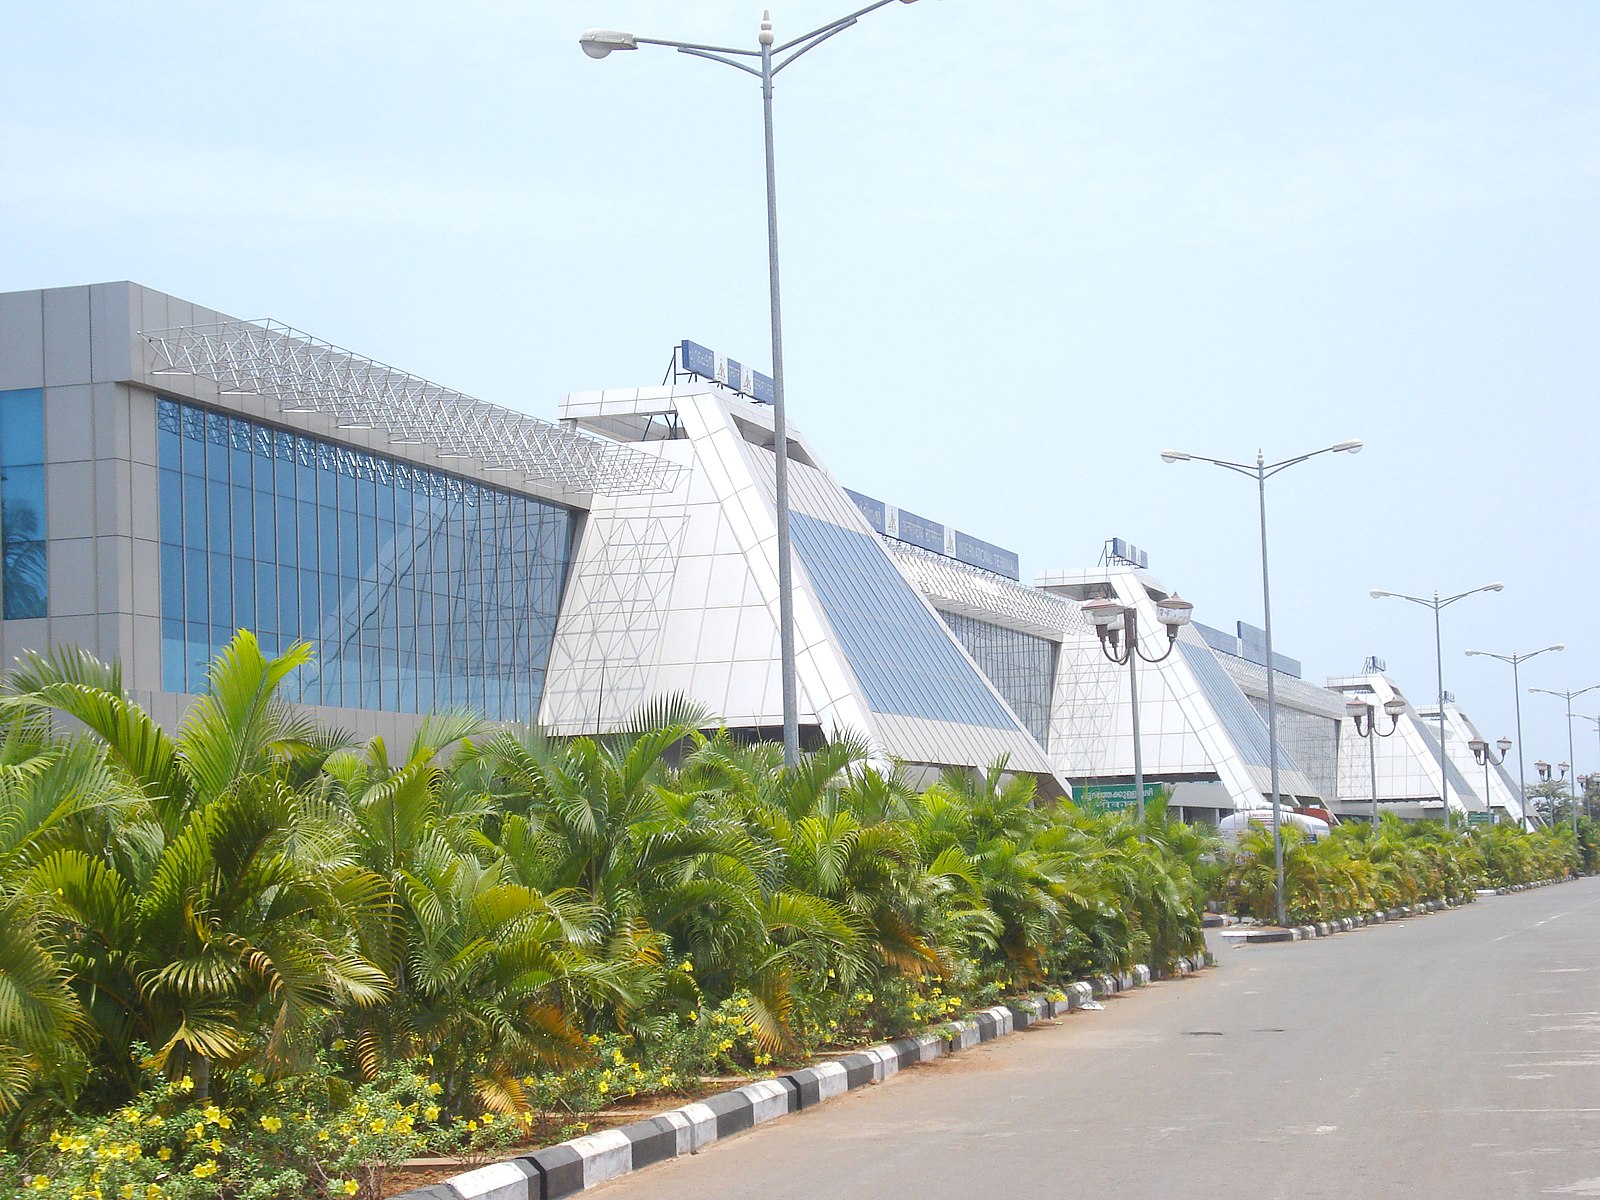 Kozhikode Calicut International Airport serves the cities of Malappuram and Kozhikode in India.